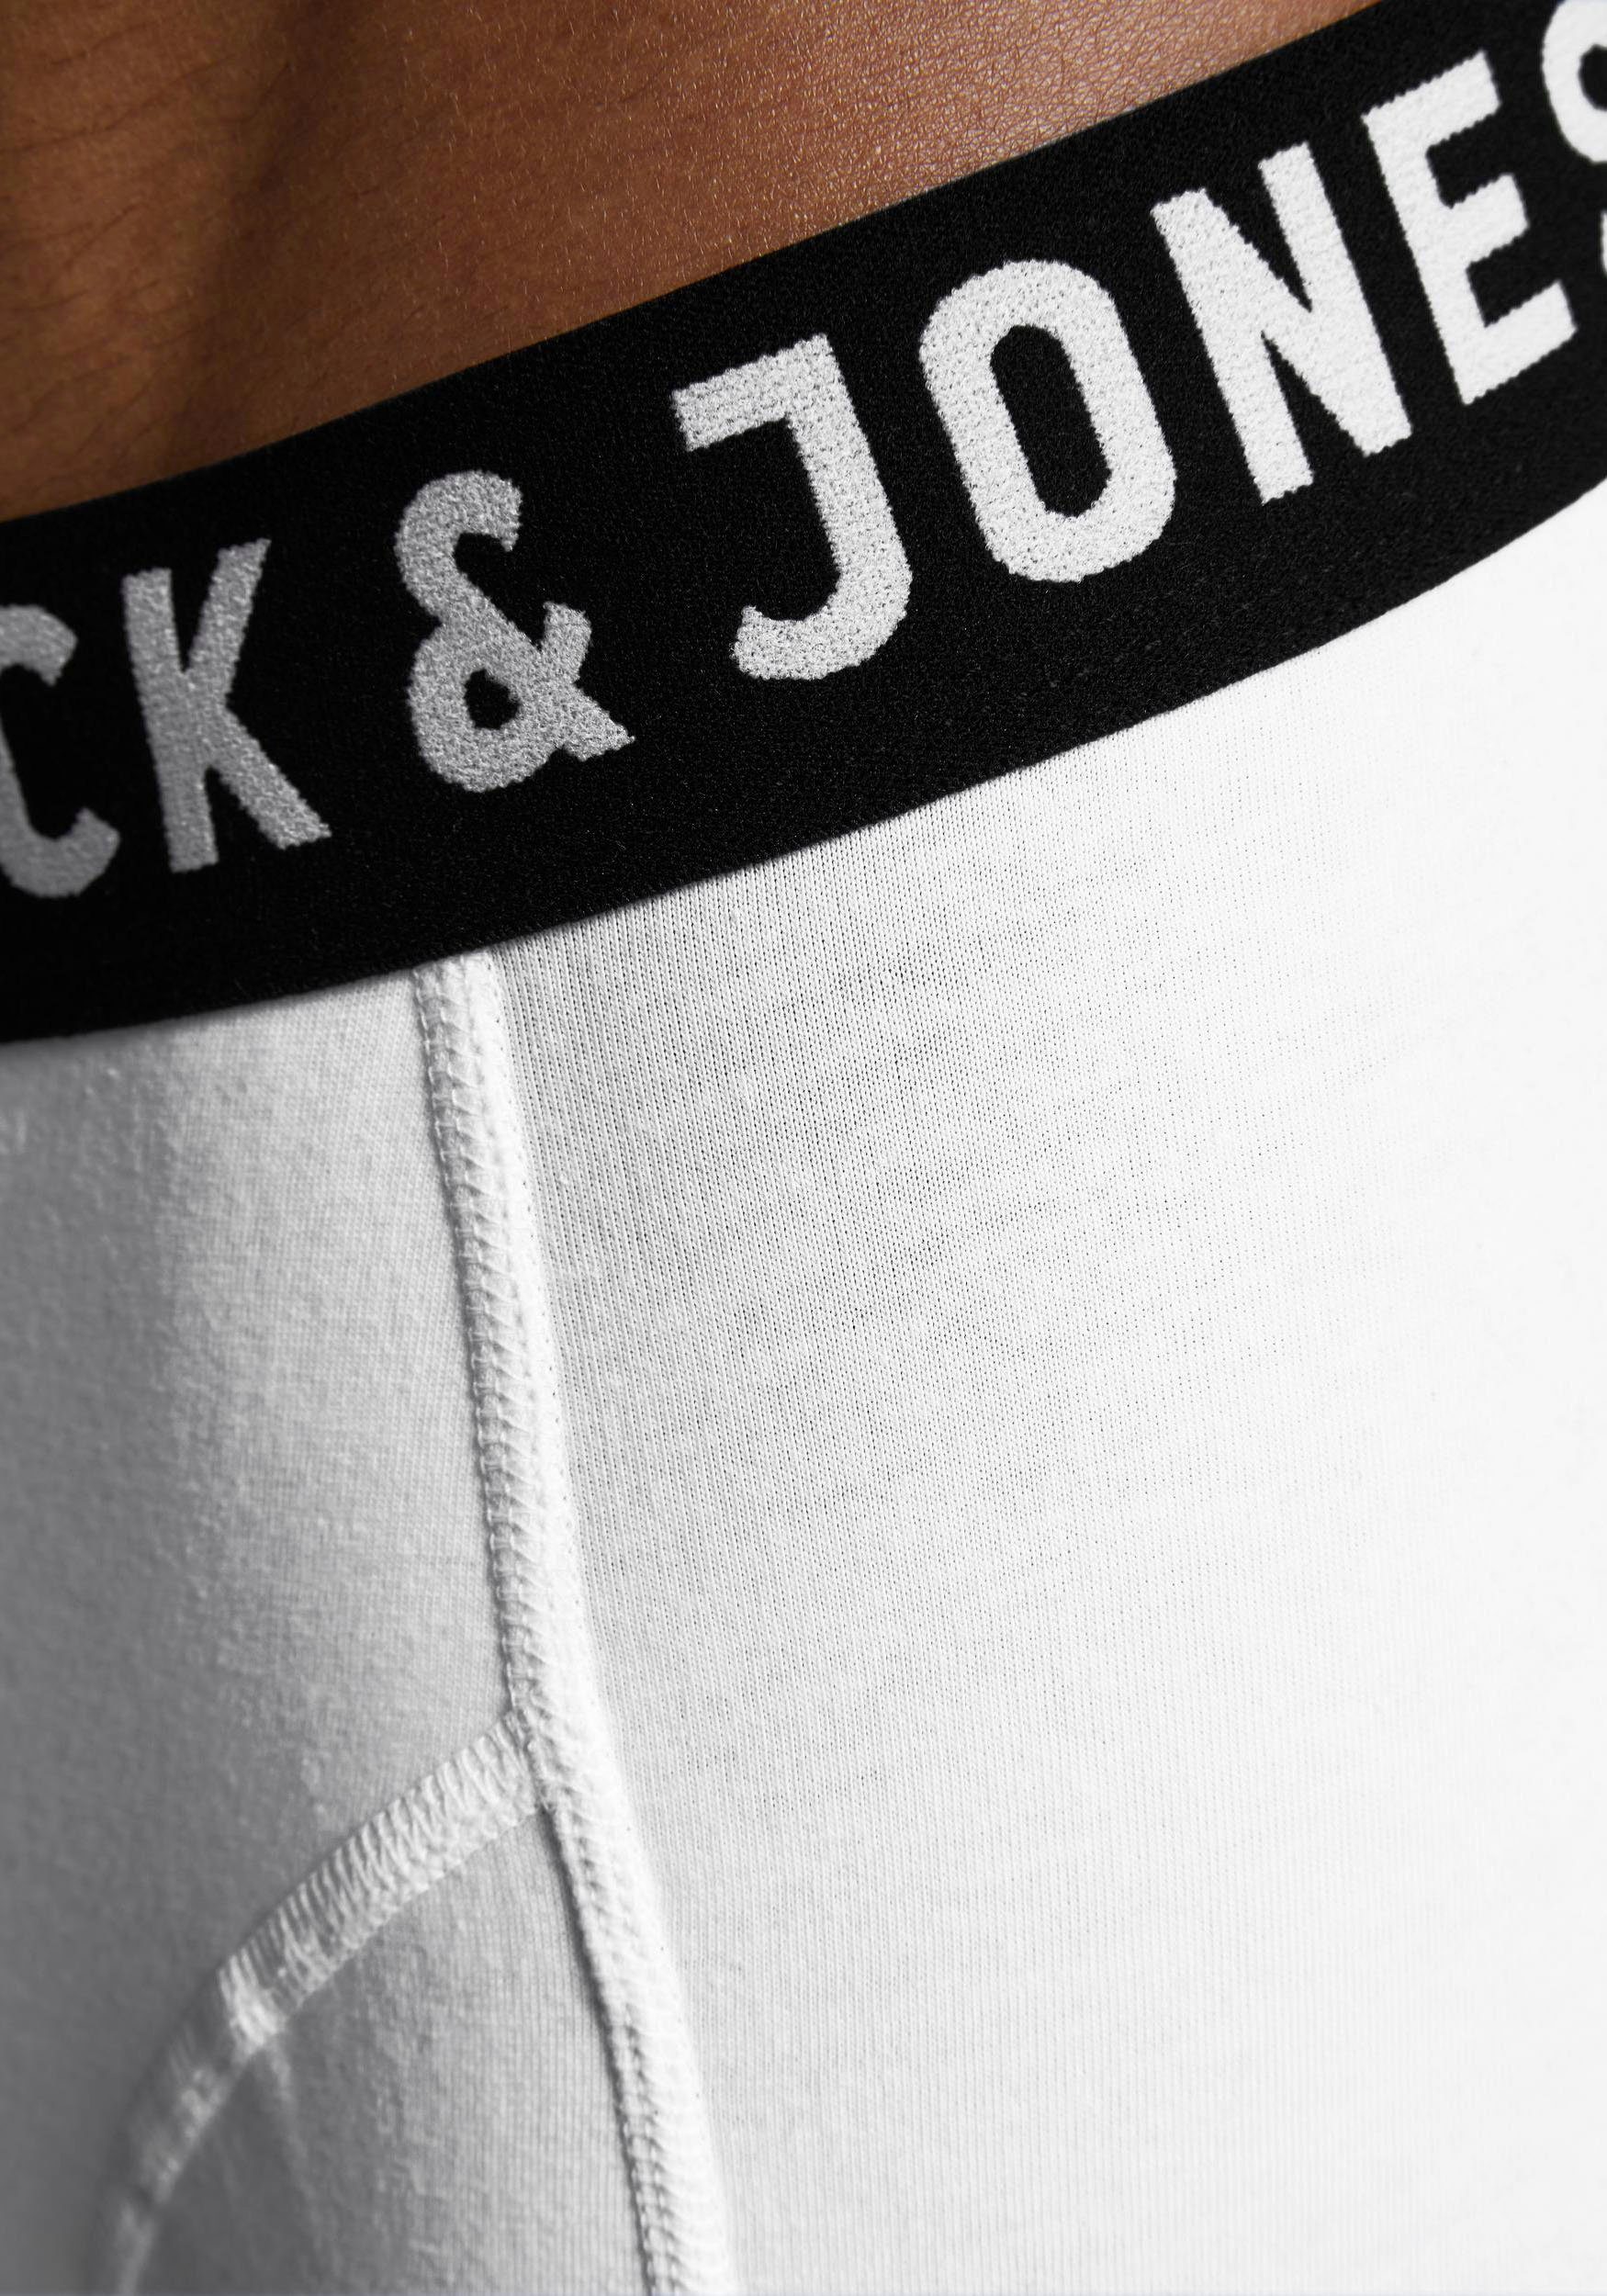 (Packung, Trunk Jack 3-PACK TRUNKS SENSE Jones & 3er-Pack) Weiß 3-St., NOOS